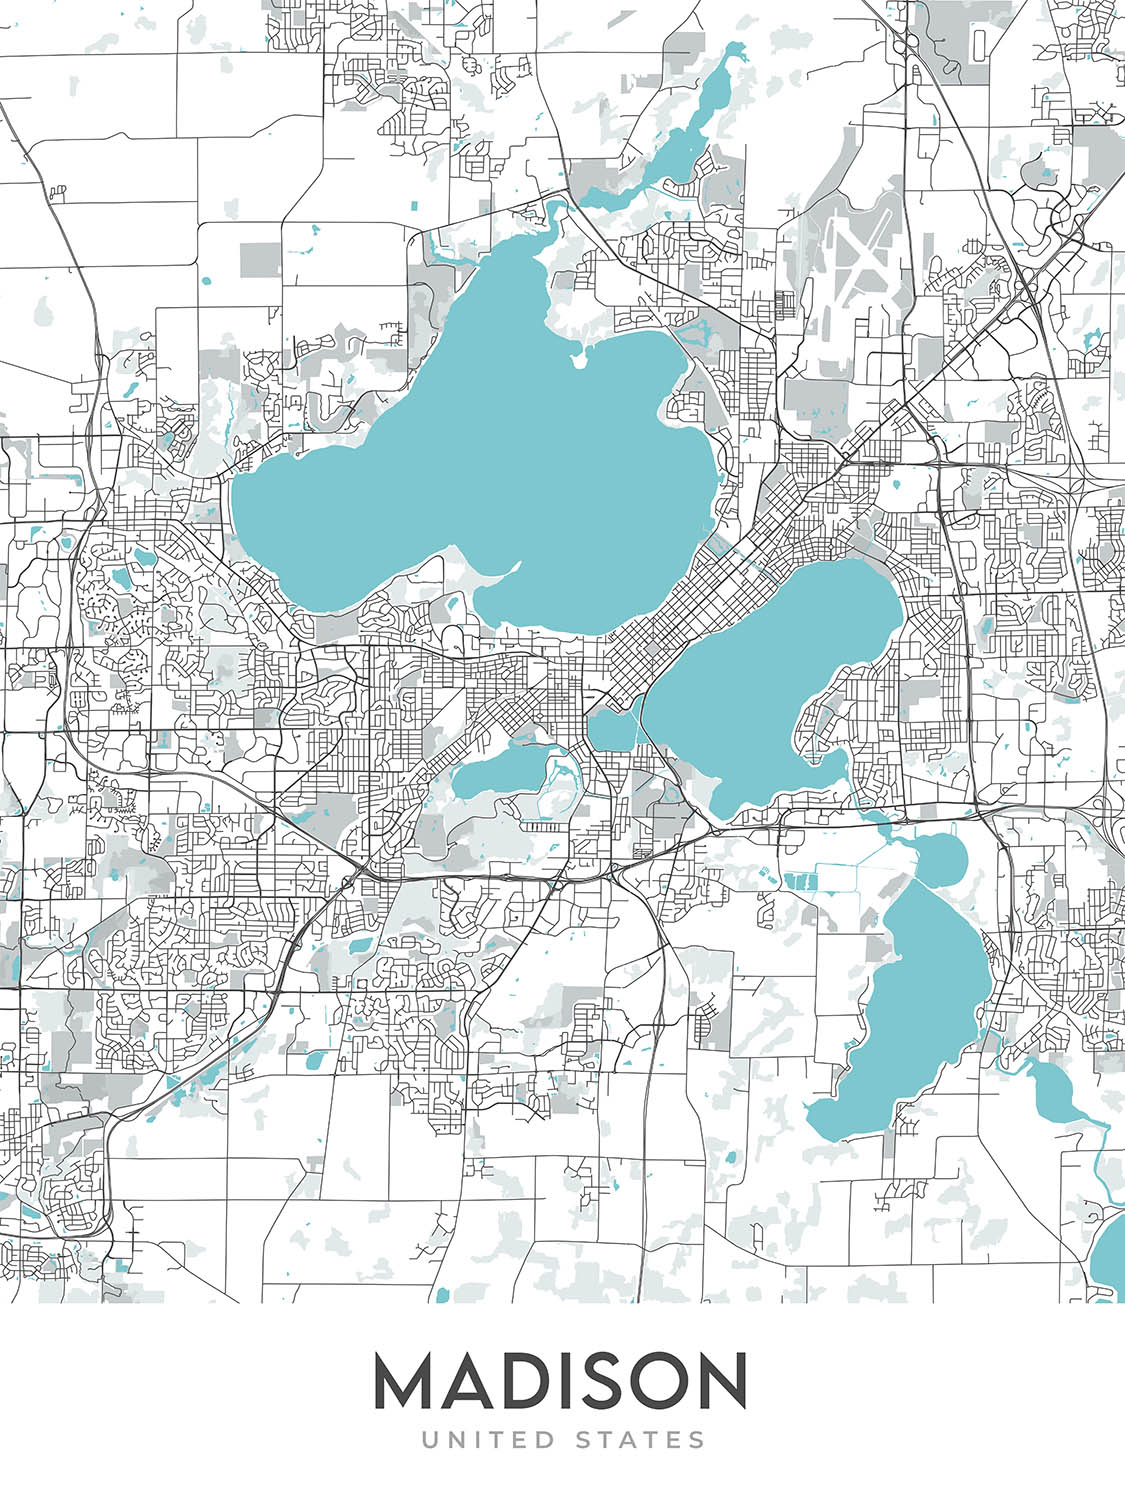 Moderner Stadtplan von Madison, WI: UW-Madison, Capitol, State St, Olbrich Park, Henry Vilas Zoo